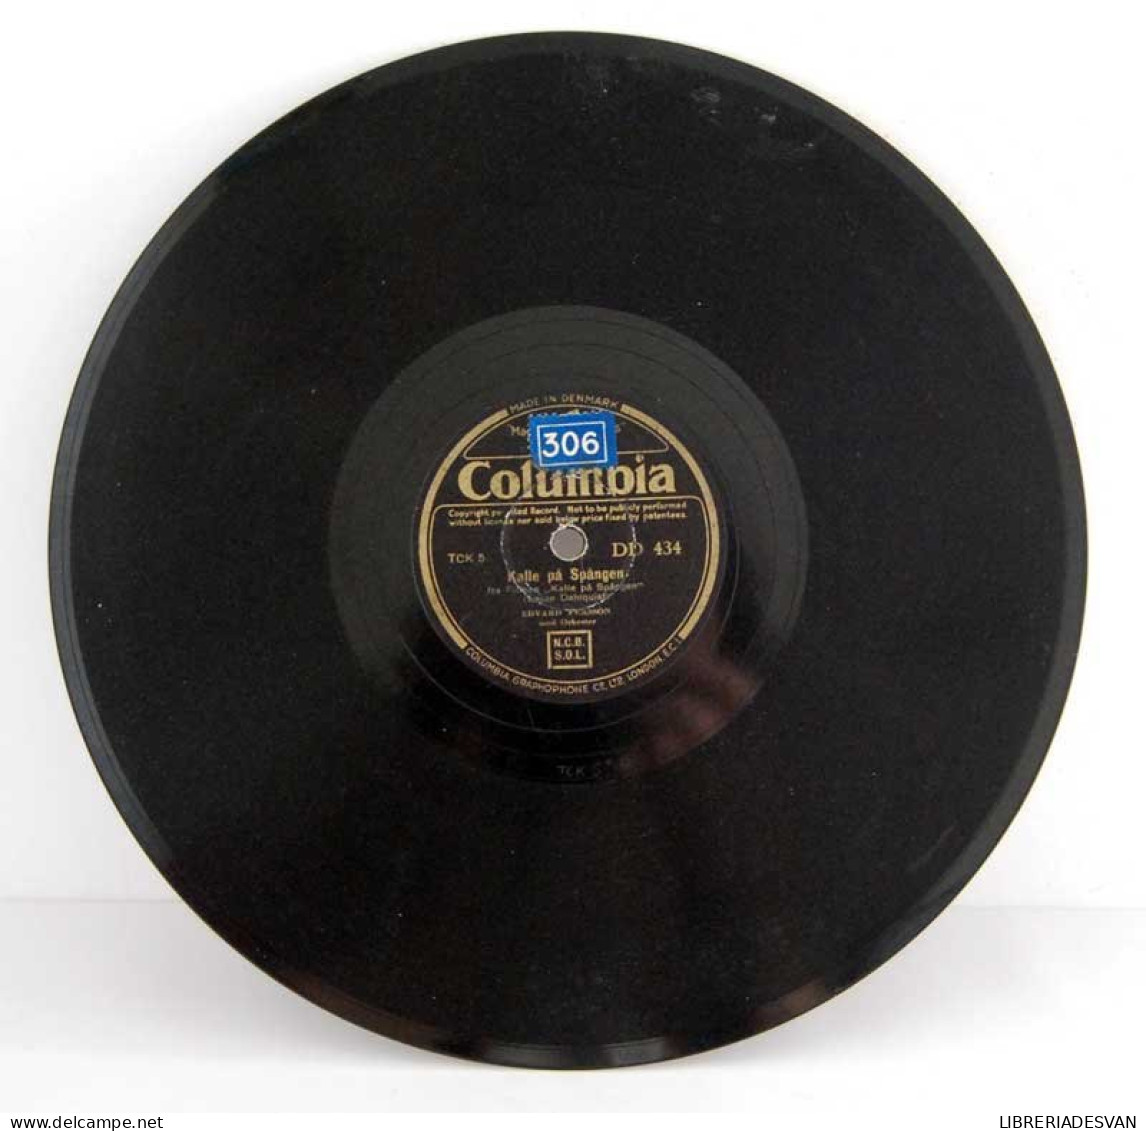 Edvard Persson - Kalle Pa Spangen / Litet Grann Fran Ovan. Disco De Pizarra DD.434 - 78 Rpm - Gramophone Records